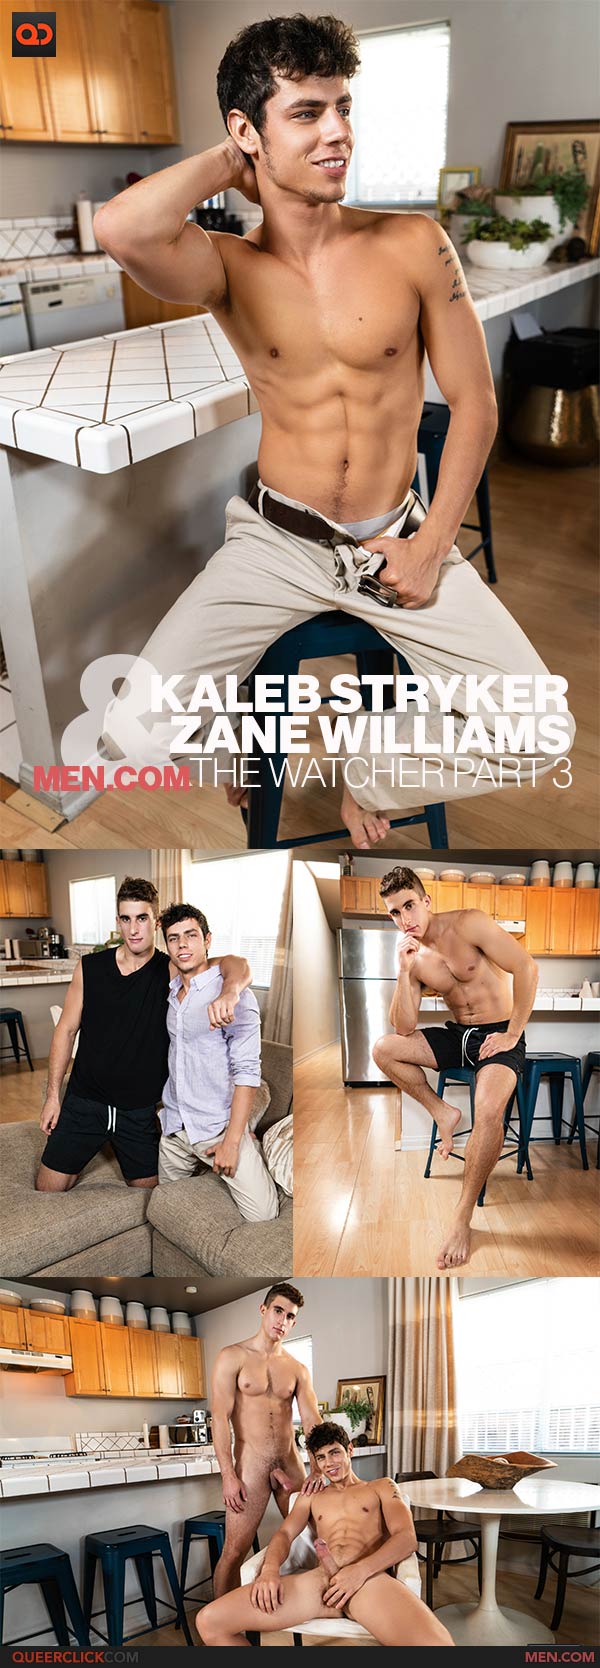 Men.com: Kaleb Stryker and Zane Williams